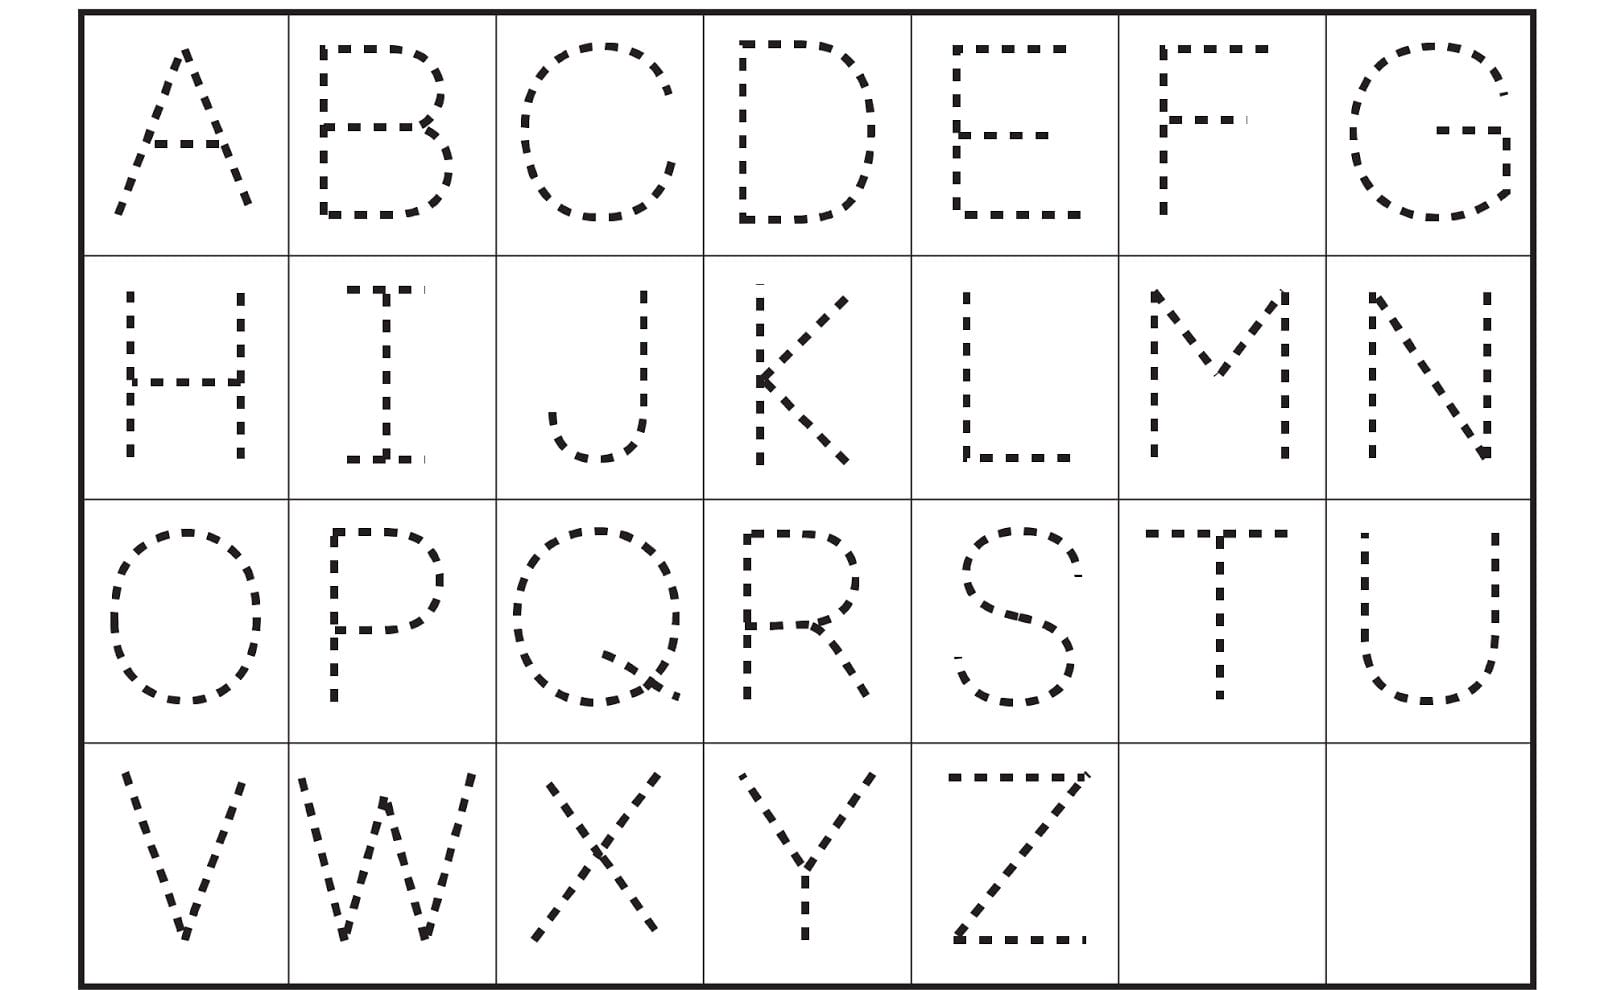 printable-alphabet-worksheets-to-turn-into-a-workbook-alphabet